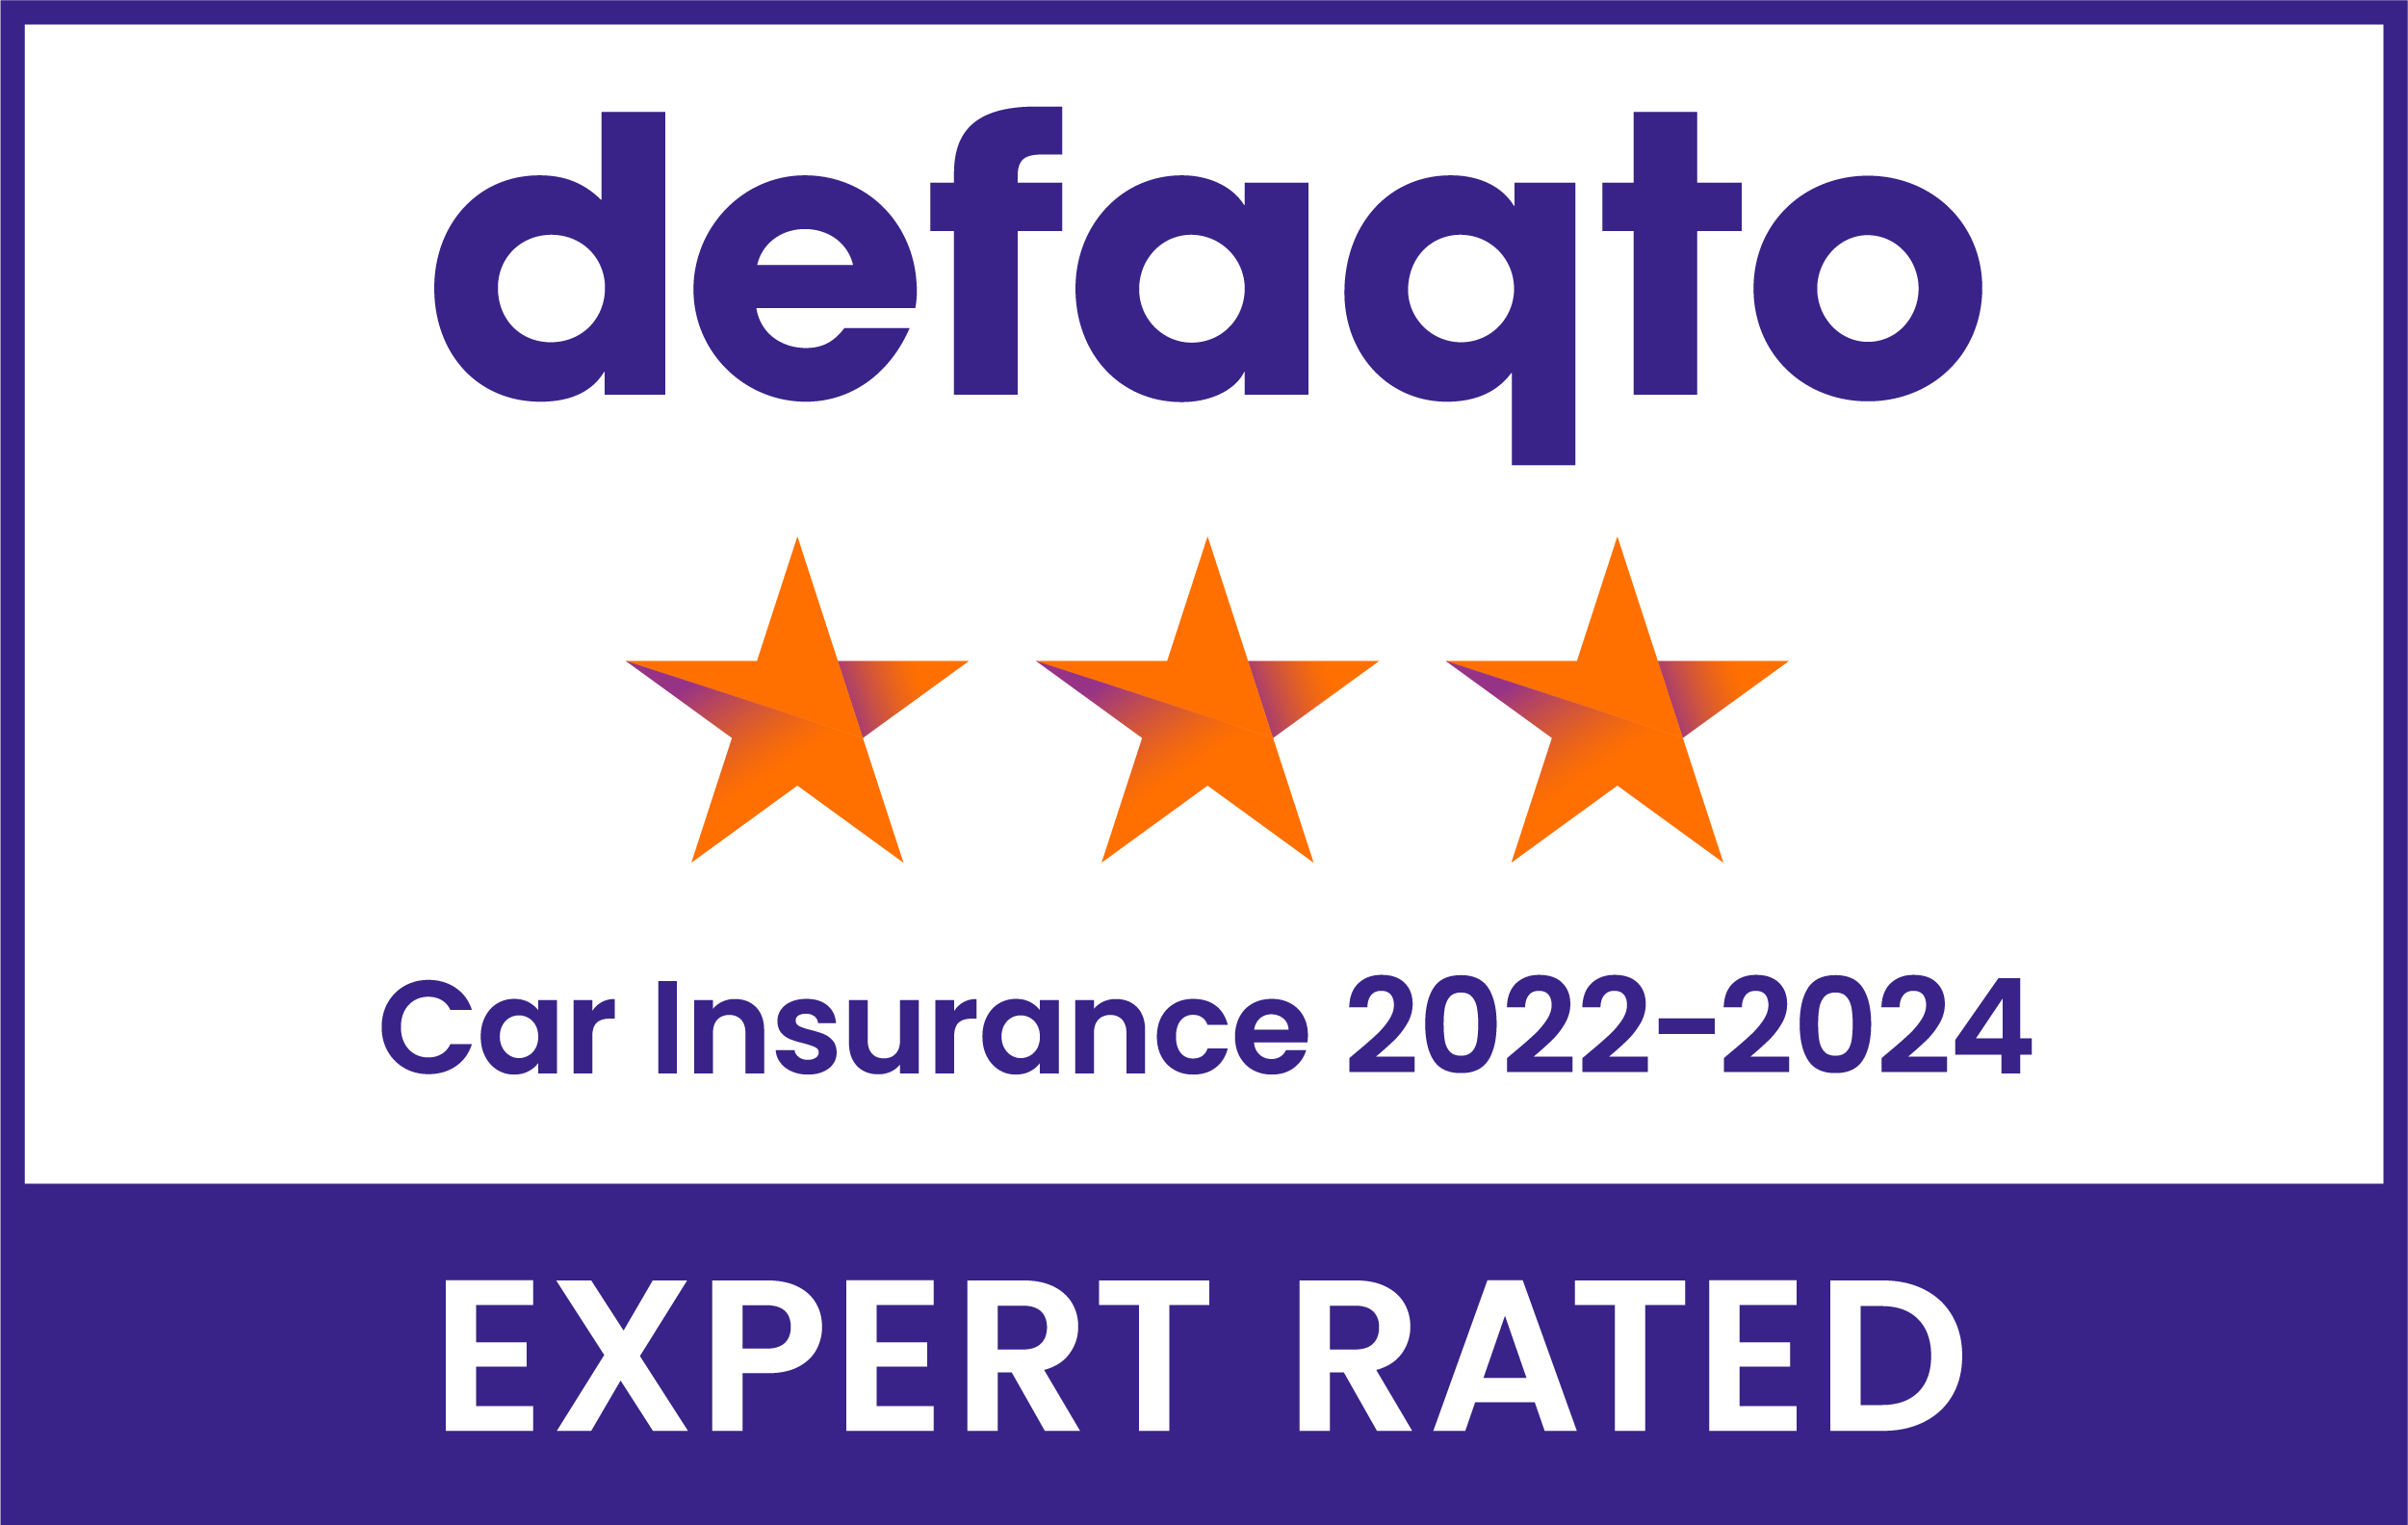 The Defaqto 3 Star rated logo